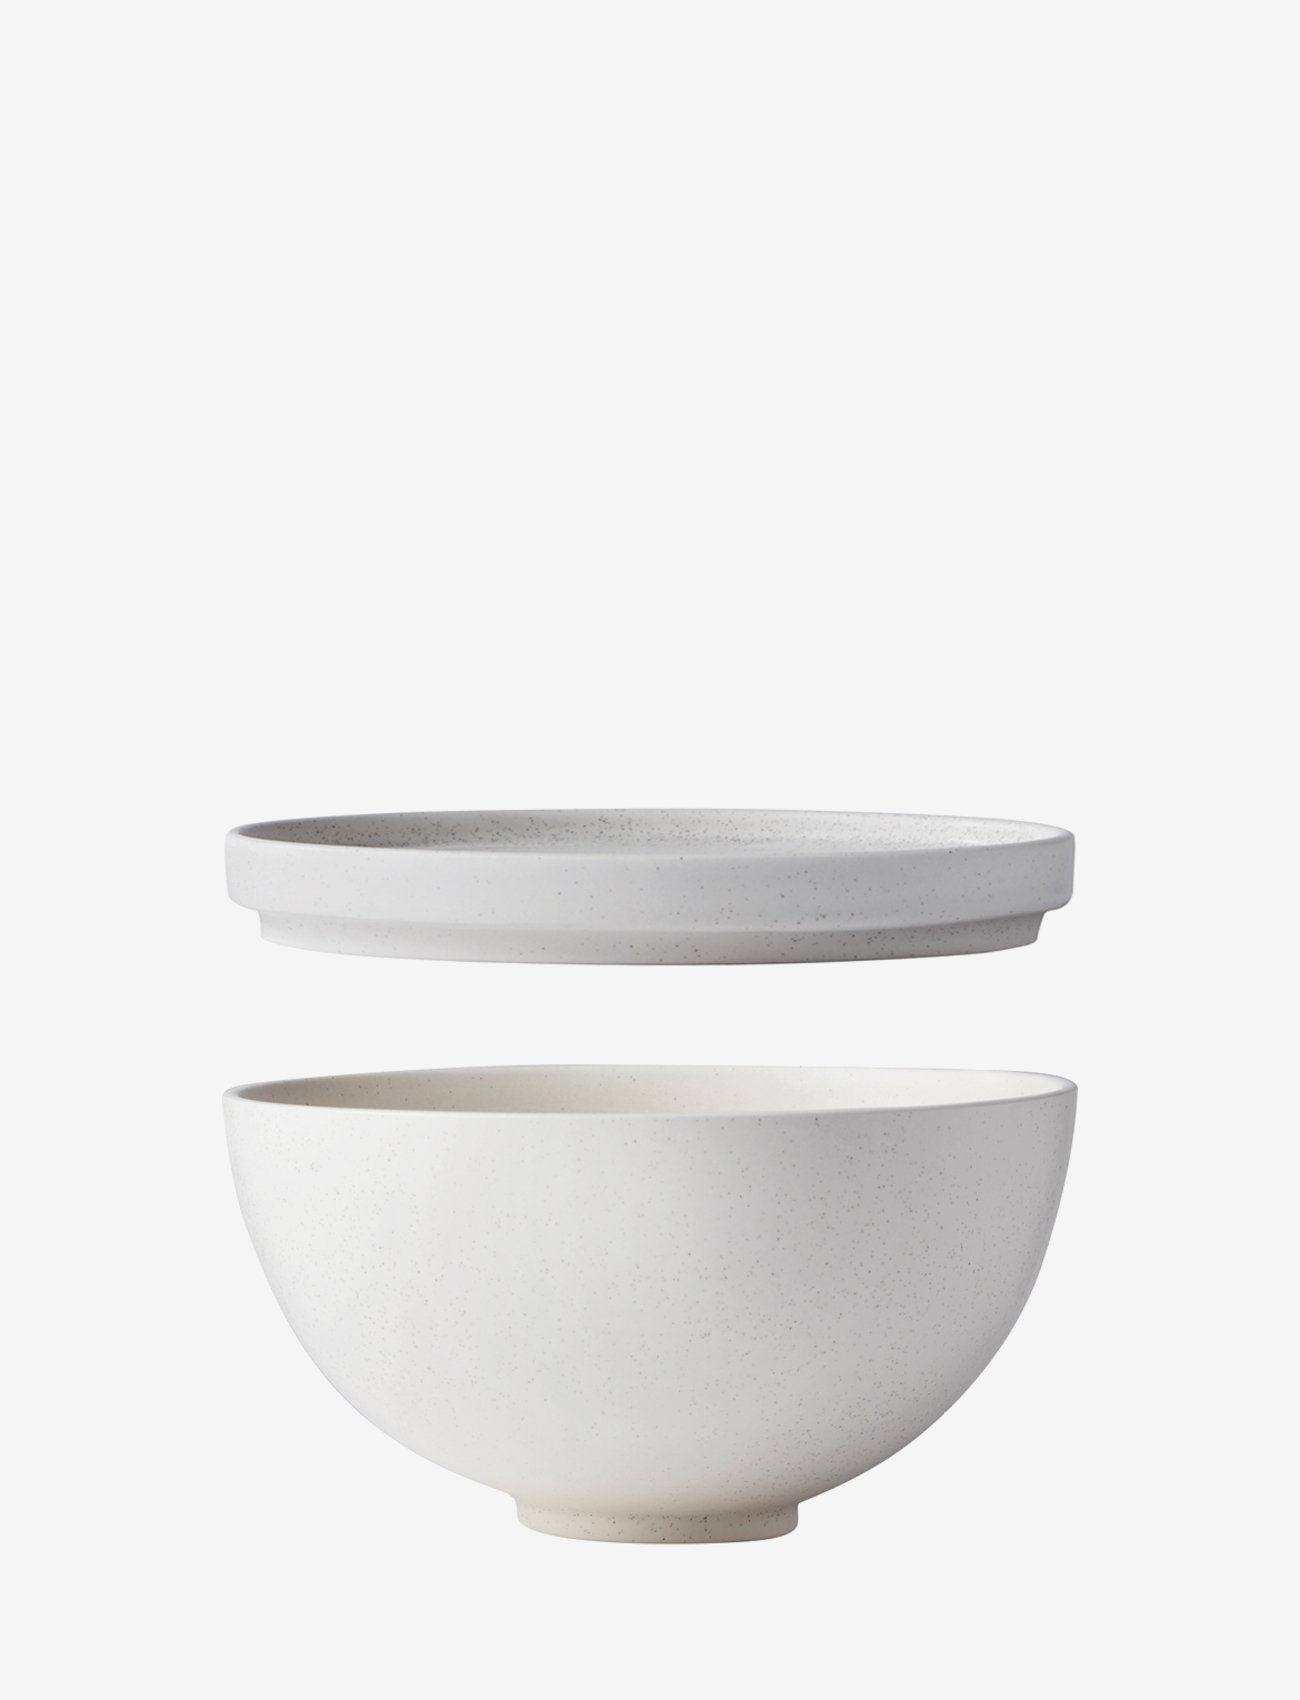 Kristina Dam Studio - Setomono Bowl Set - Large - Off-white - breakfast bowls - ceramics - 0